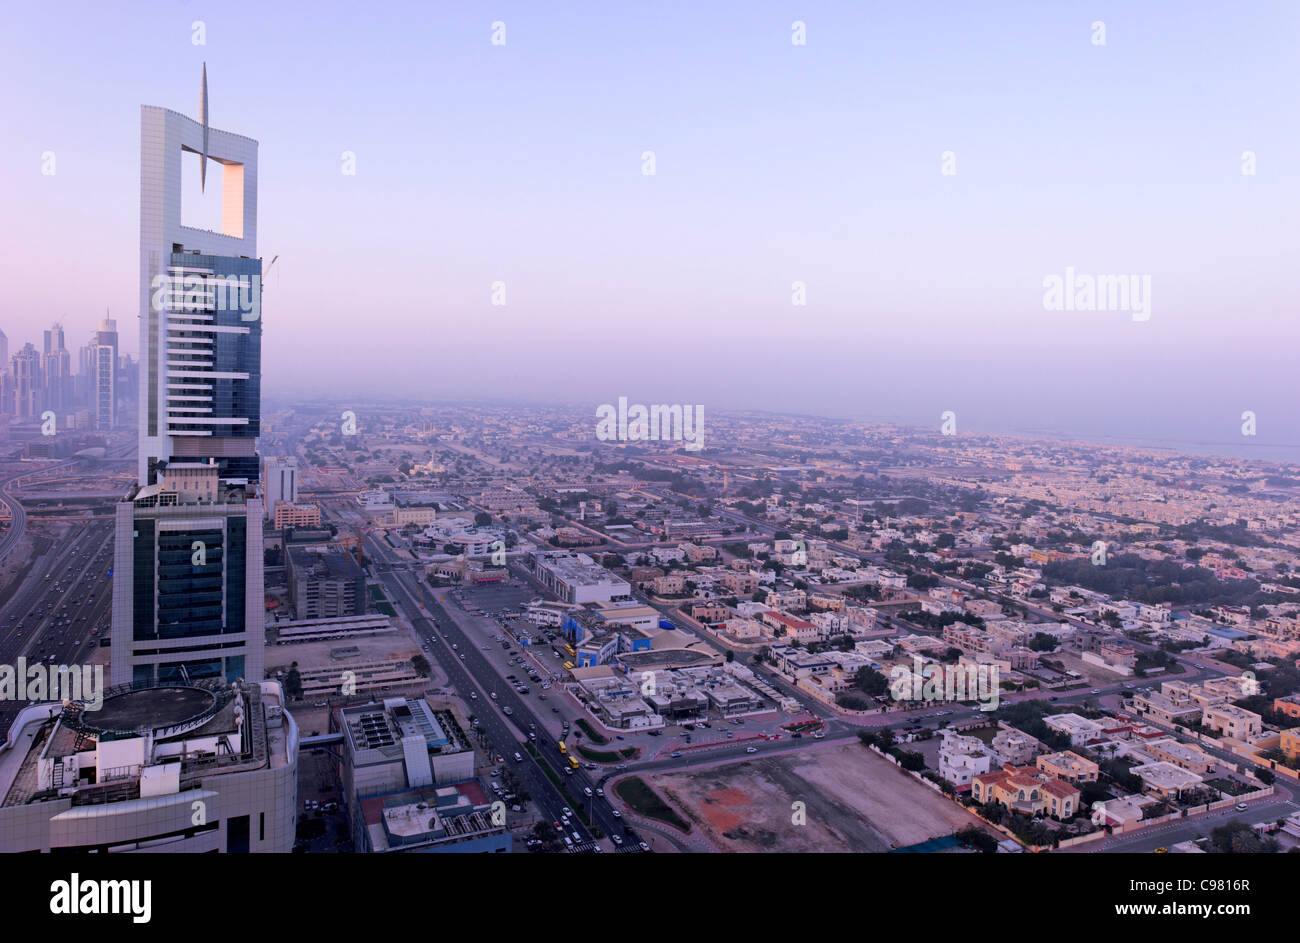 Blick auf Downtown Dubai, Türme, Hochhäuser, Hotels, moderne Architektur, Sheikh Zayed Road, Financial District-Dubai Stockfoto